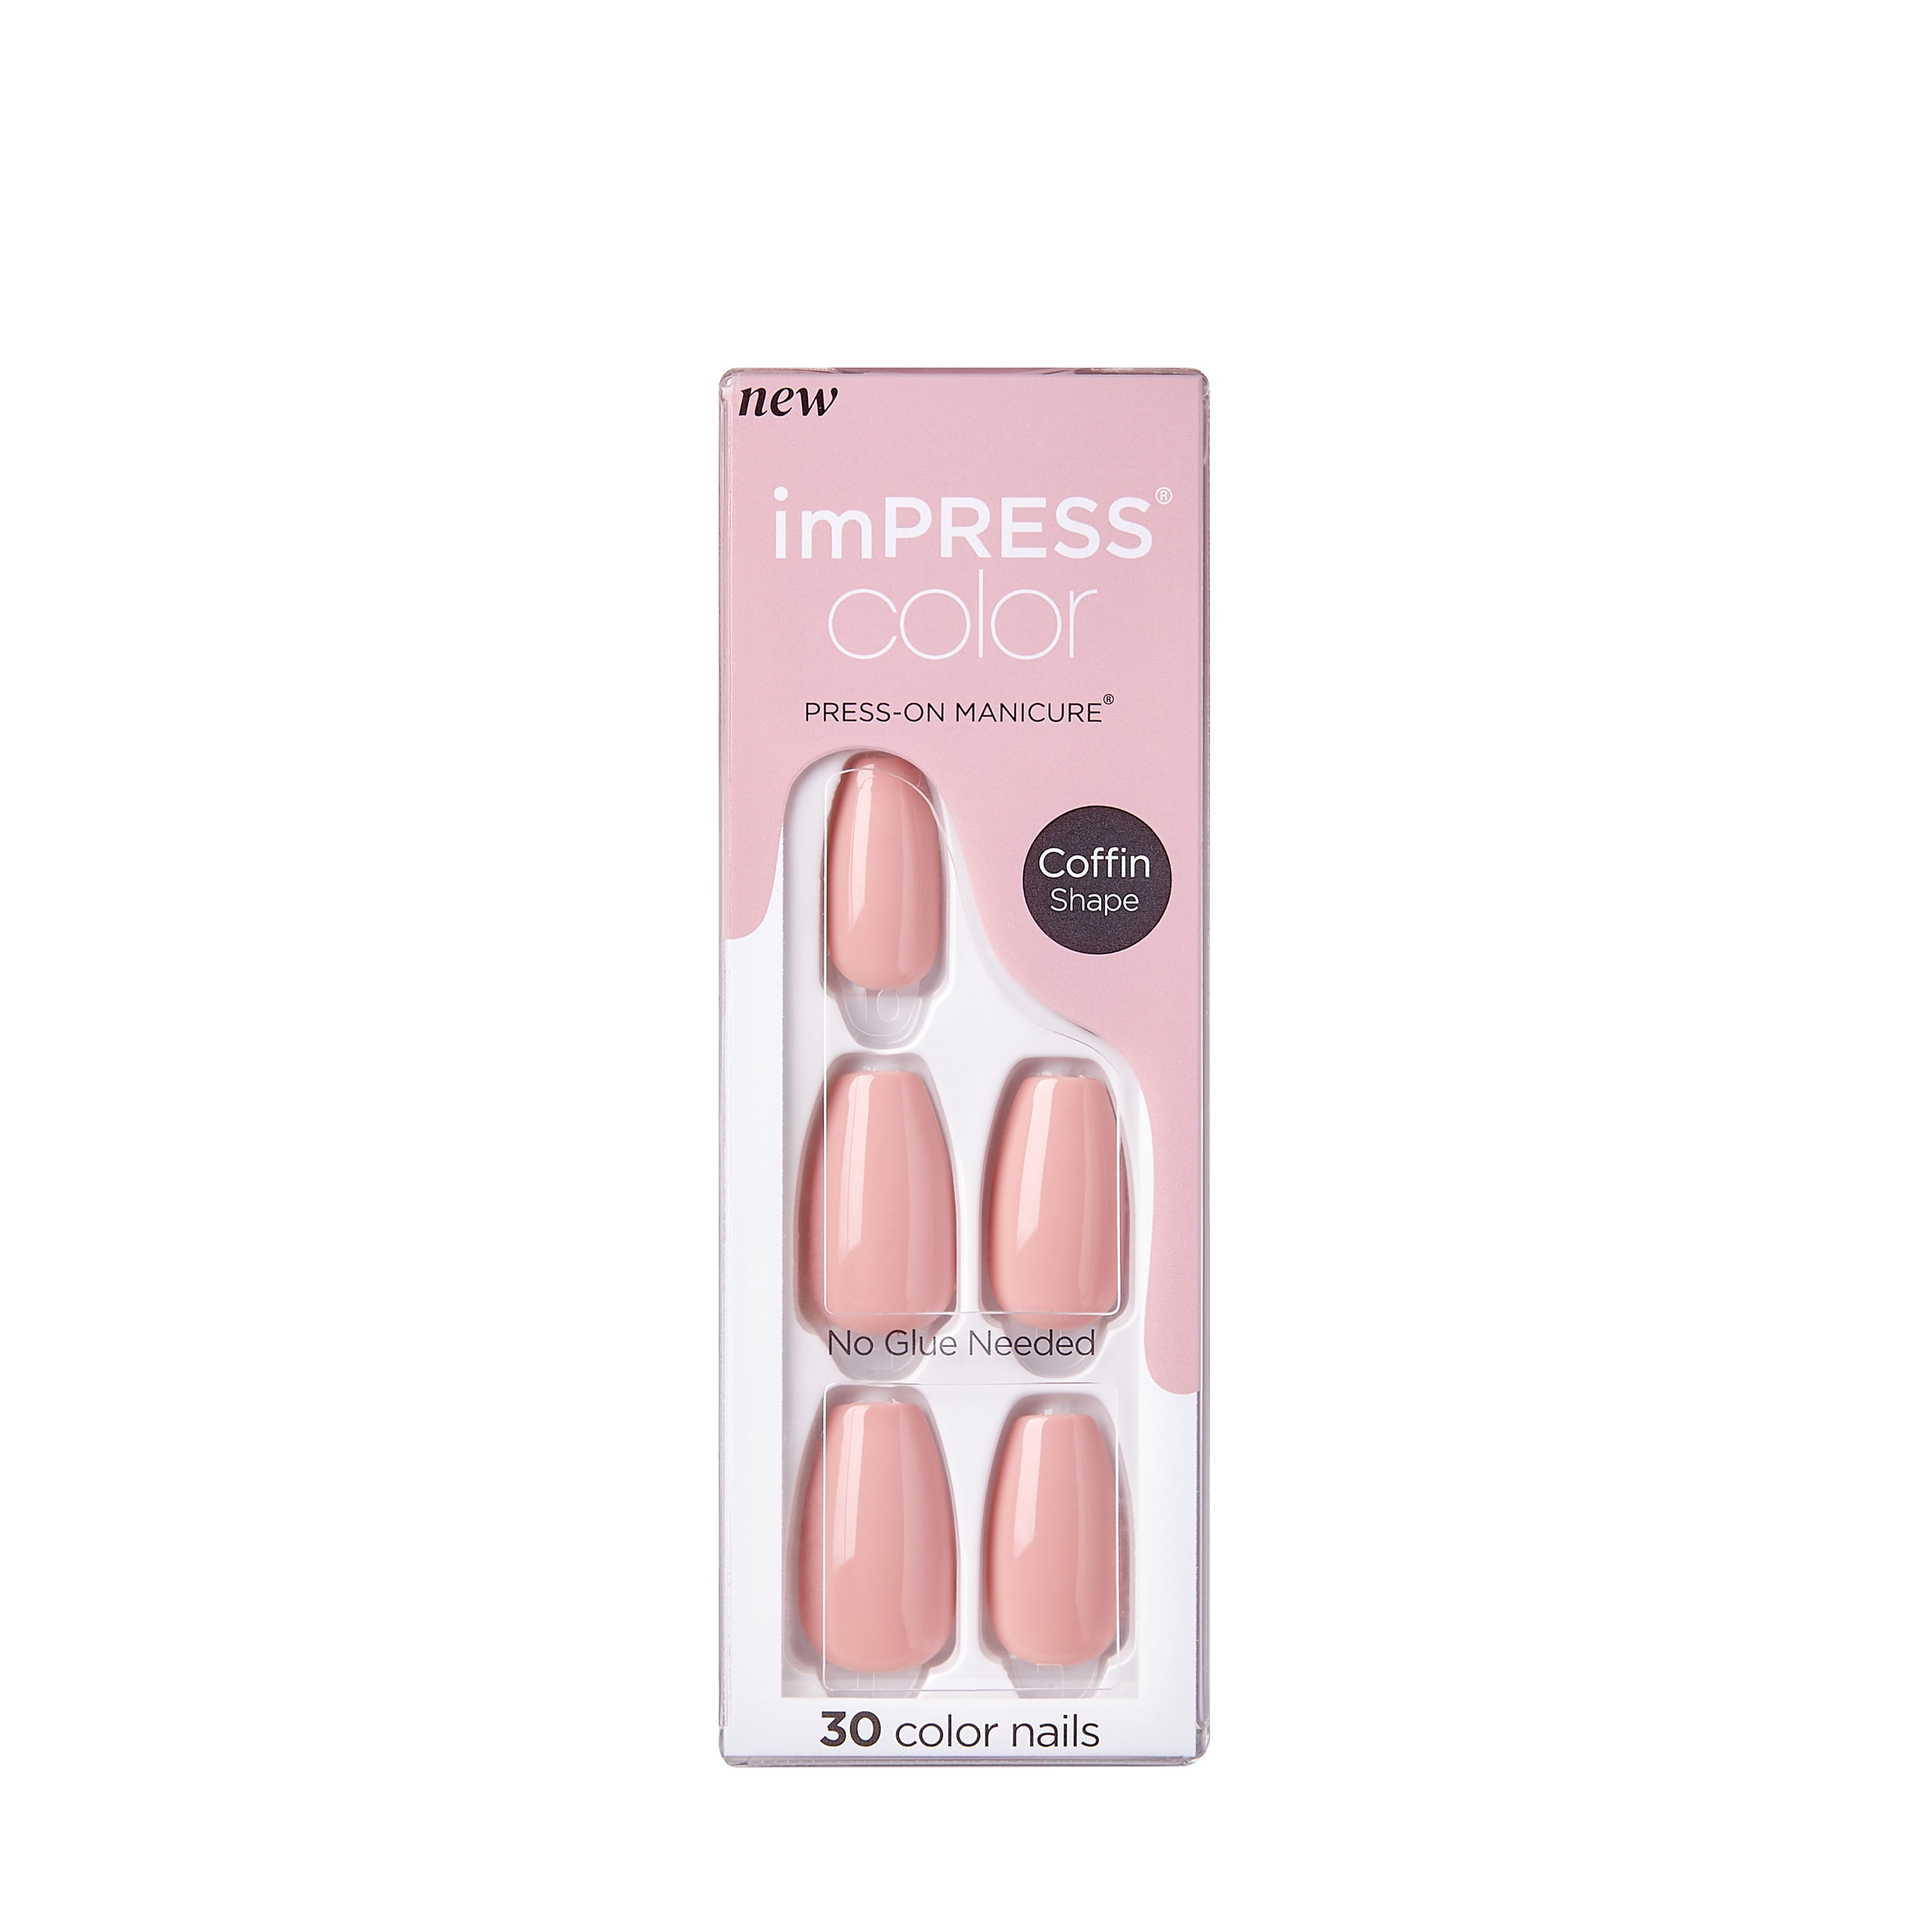 KISS imPRESS Color Press-On Manicure Fake Nails, 'Sumptuous', 30 Count -  